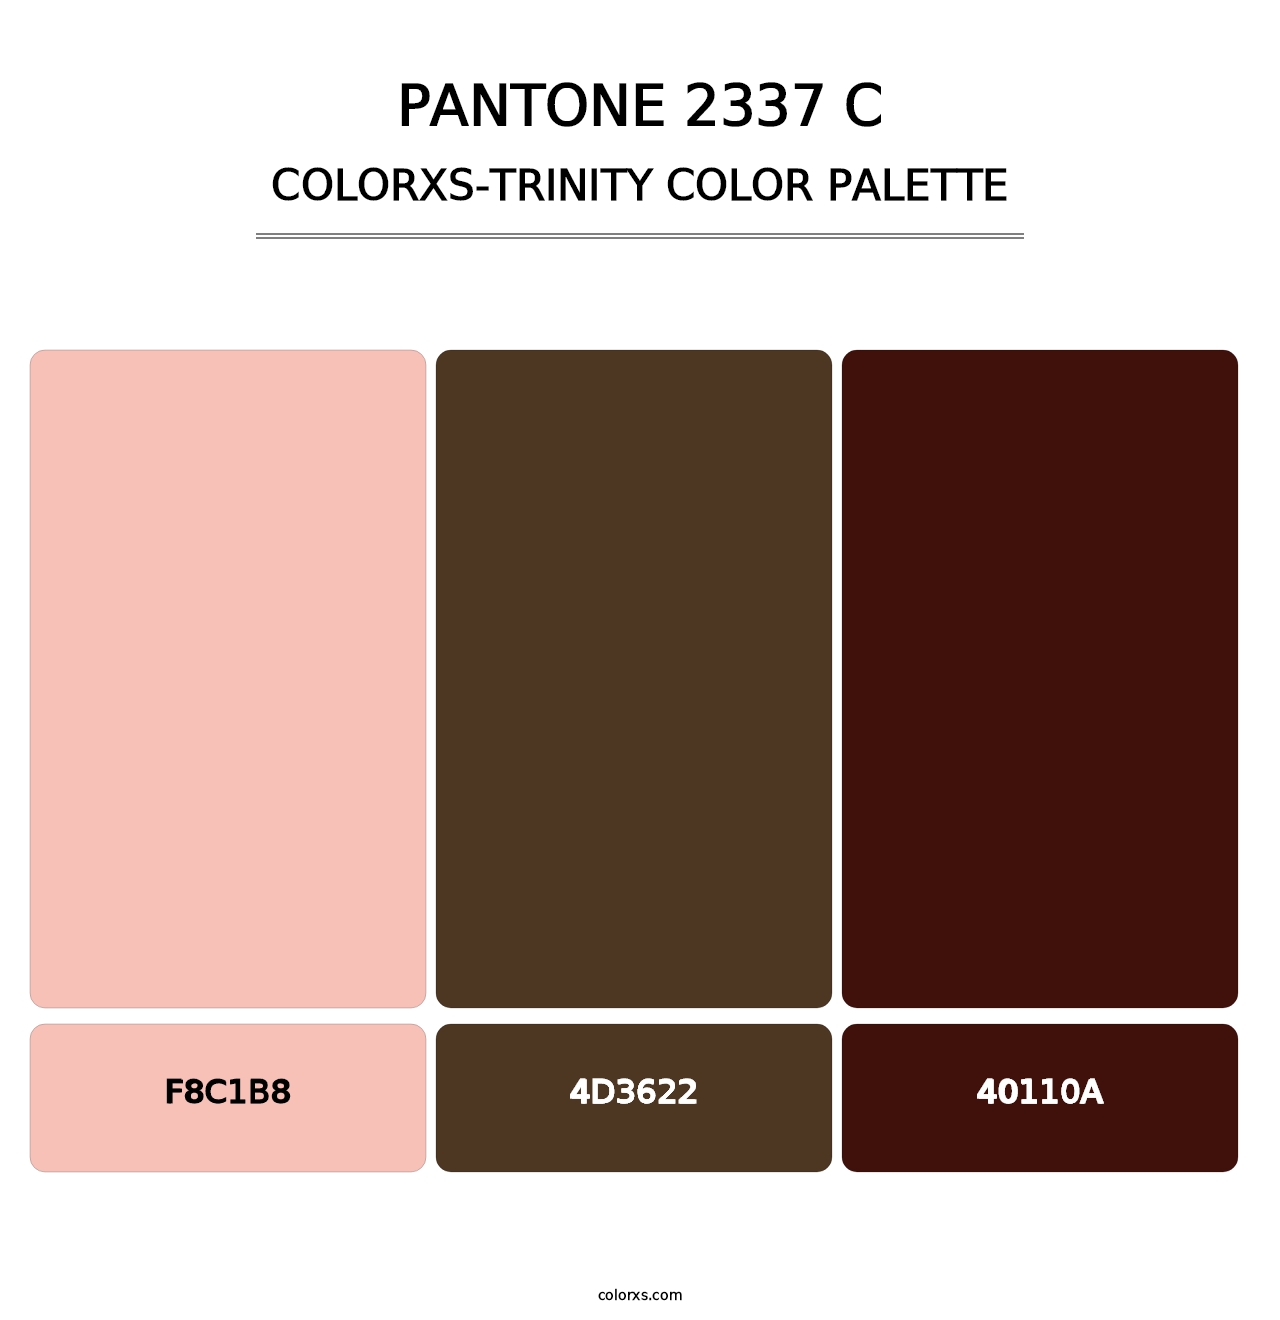 PANTONE 2337 C - Colorxs Trinity Palette